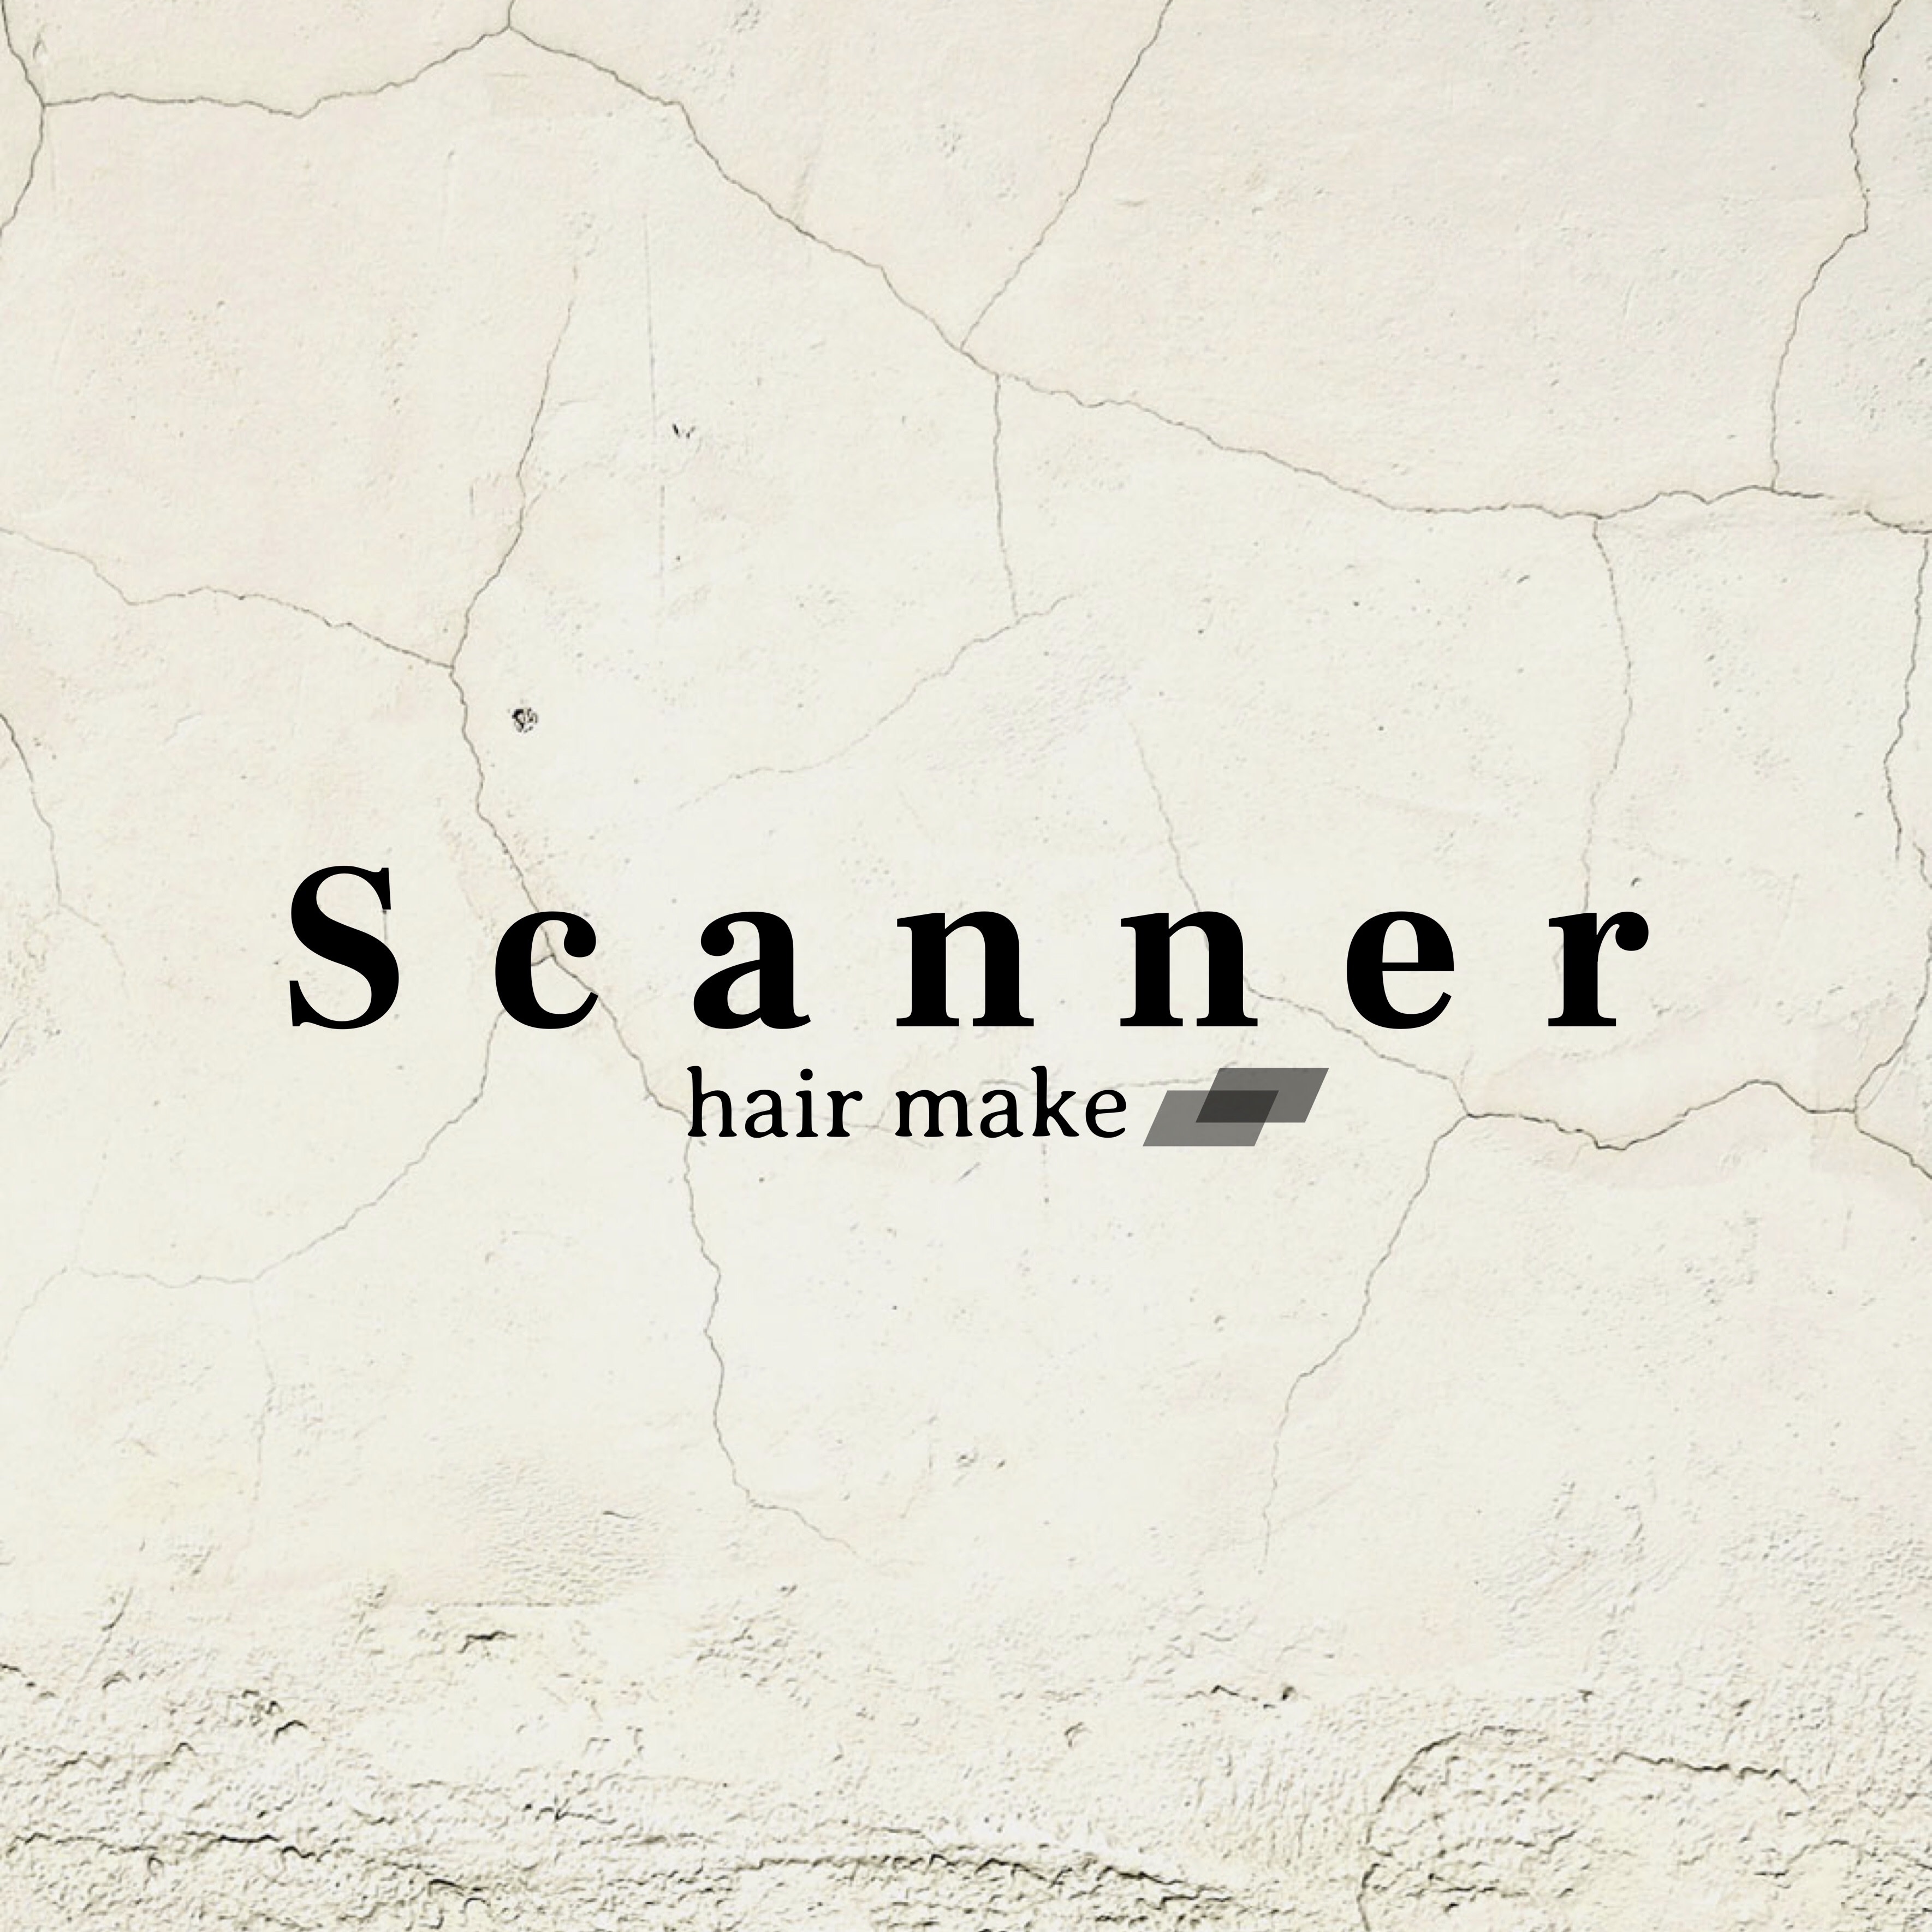 Scanner hair make【スキャナー ヘア メイク】のスタイル紹介。Scanner hair make